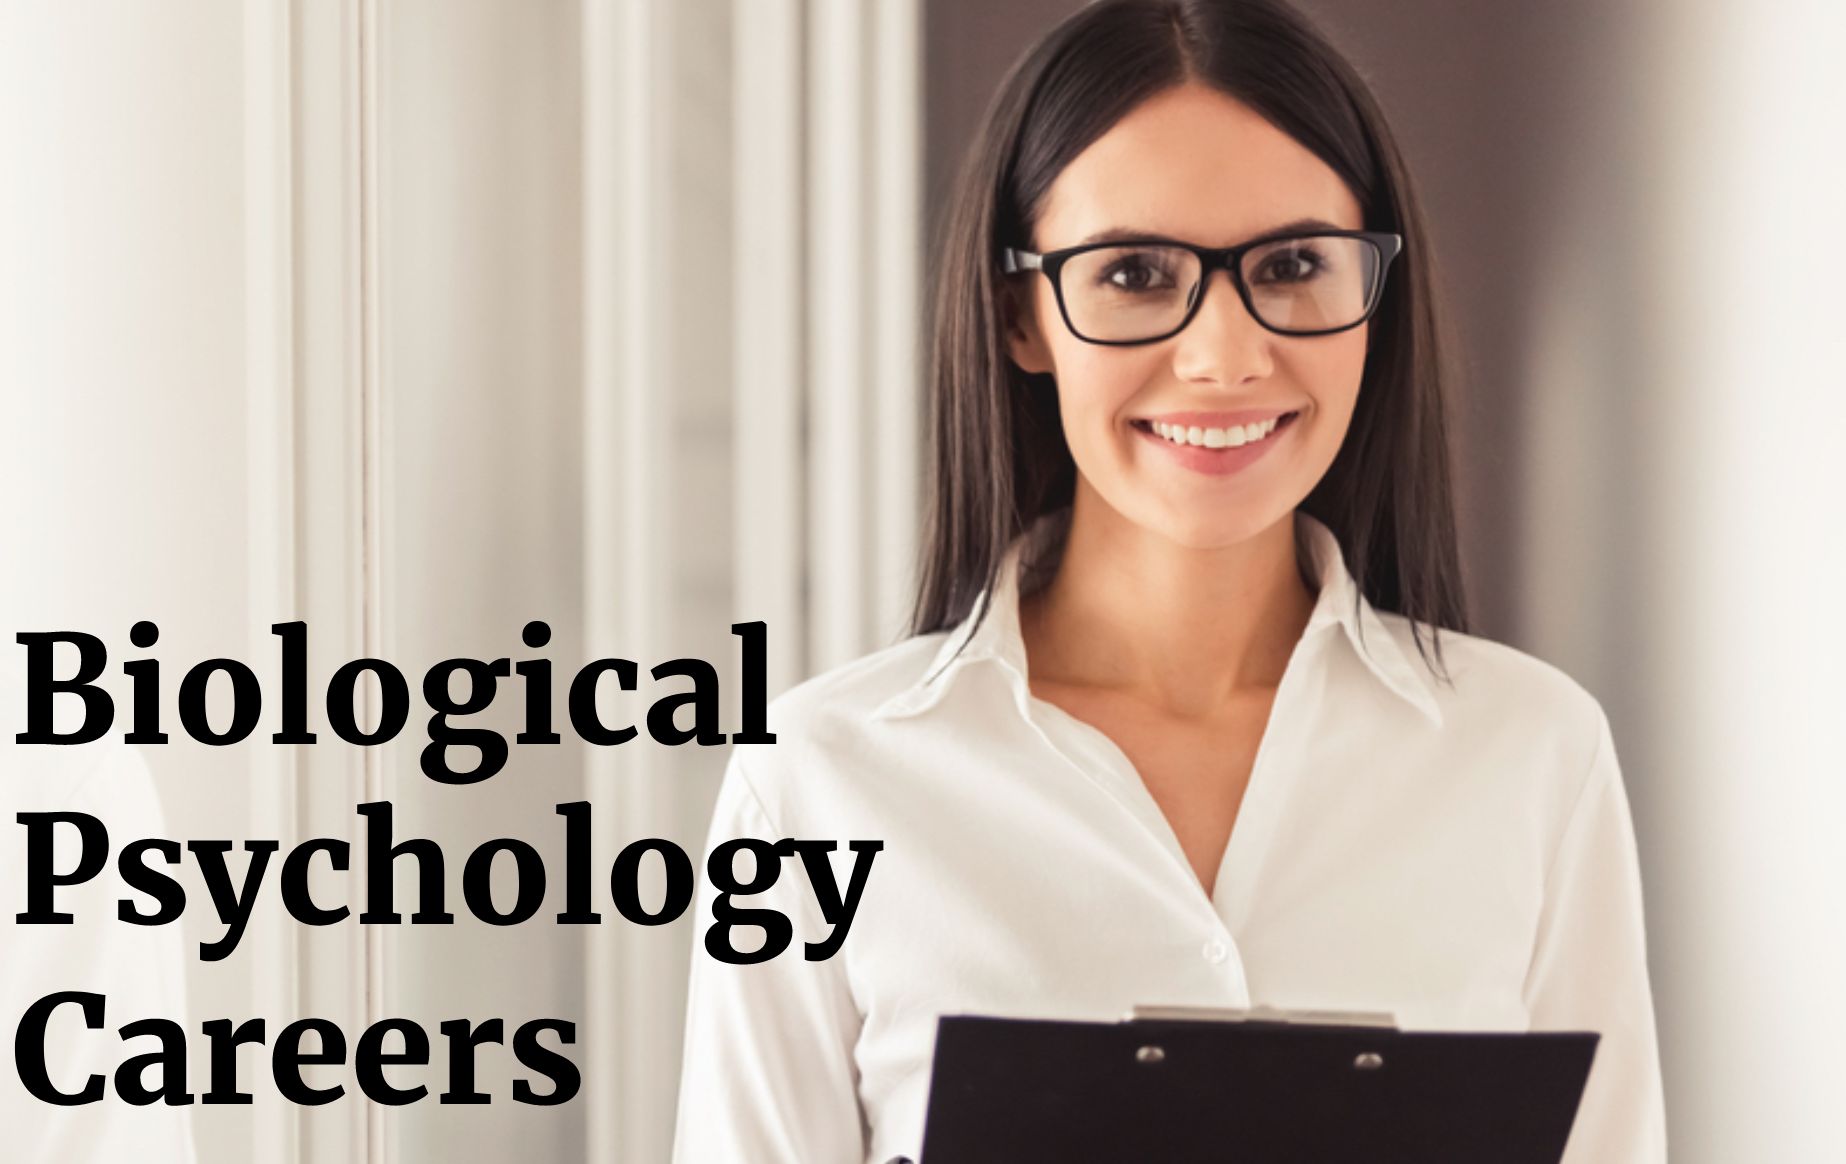 Biological Psychology Careers: You Should Explore